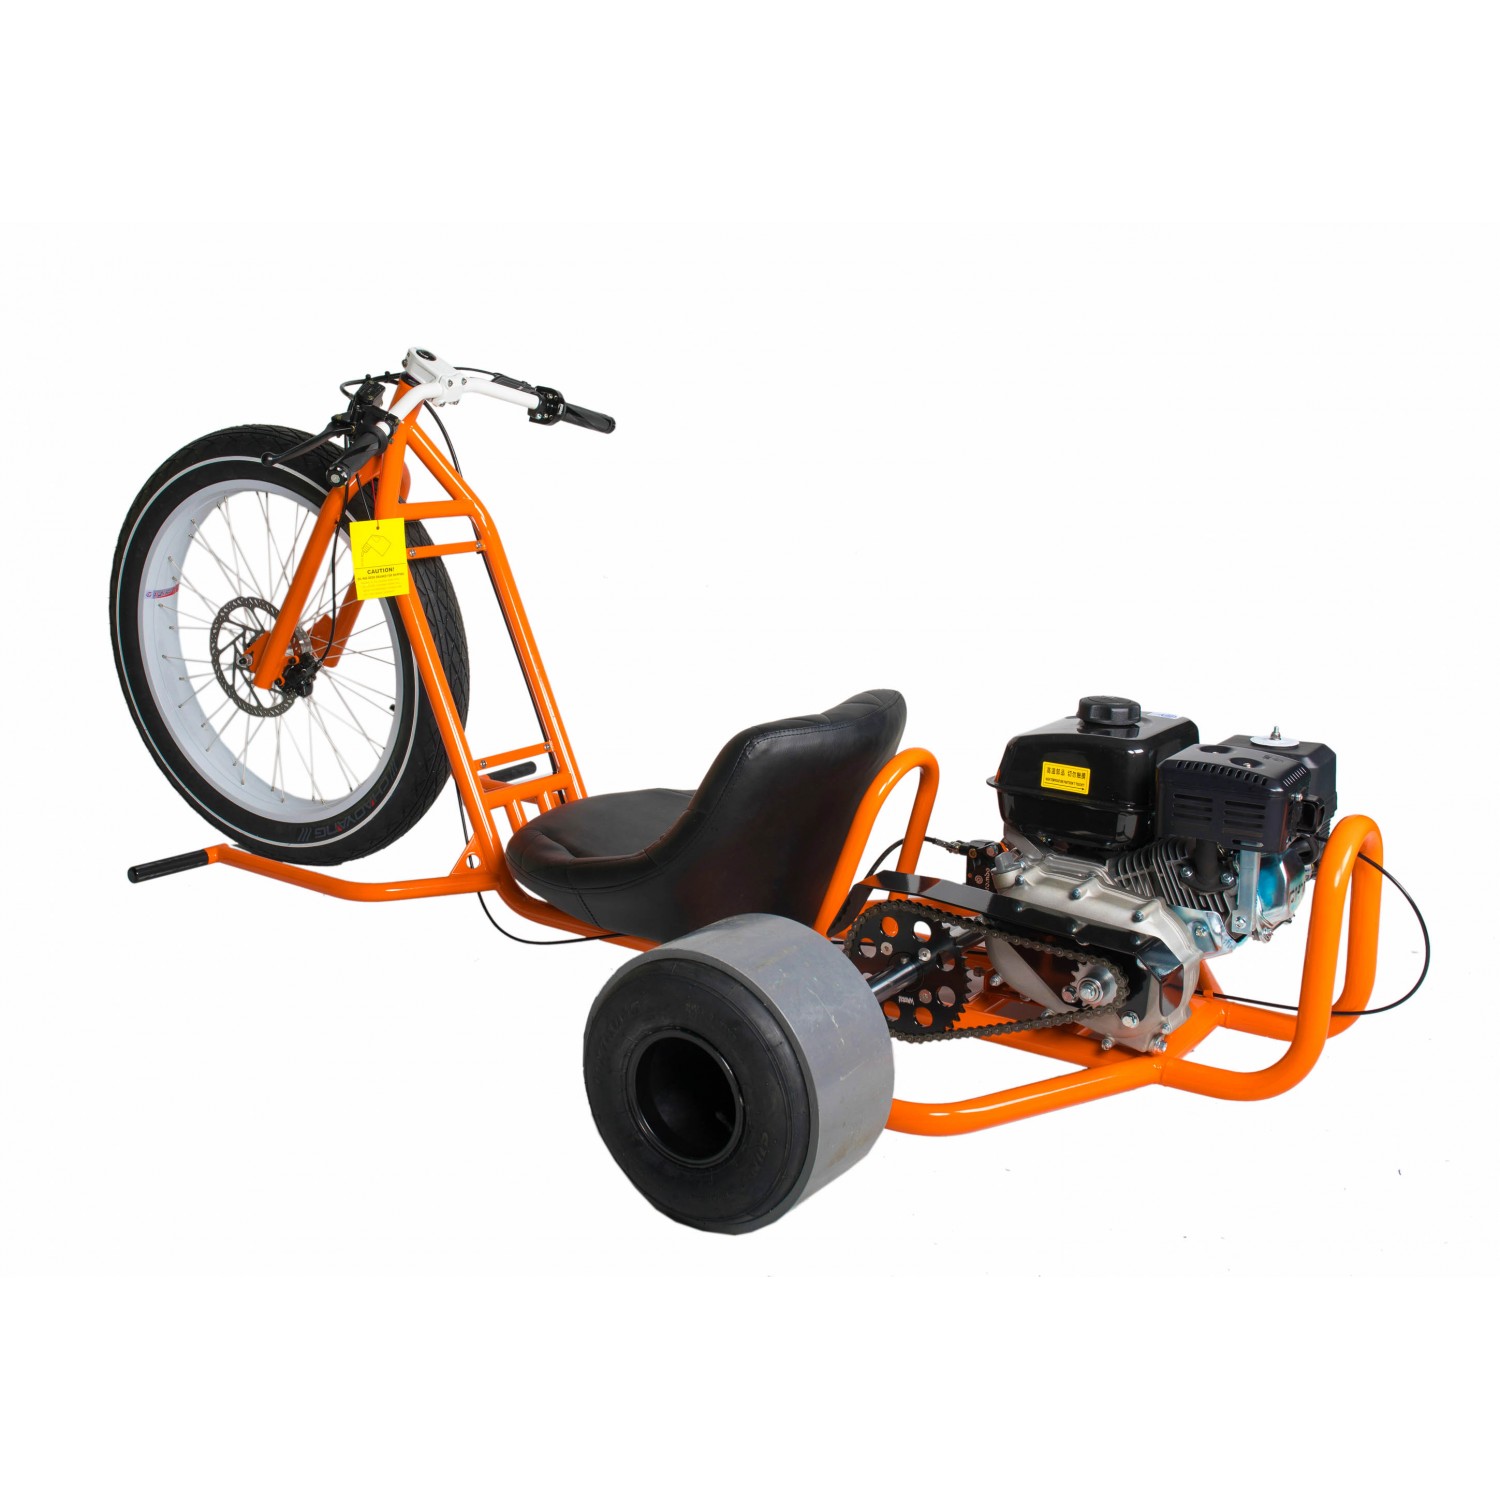 360 Trikes Orange Edition